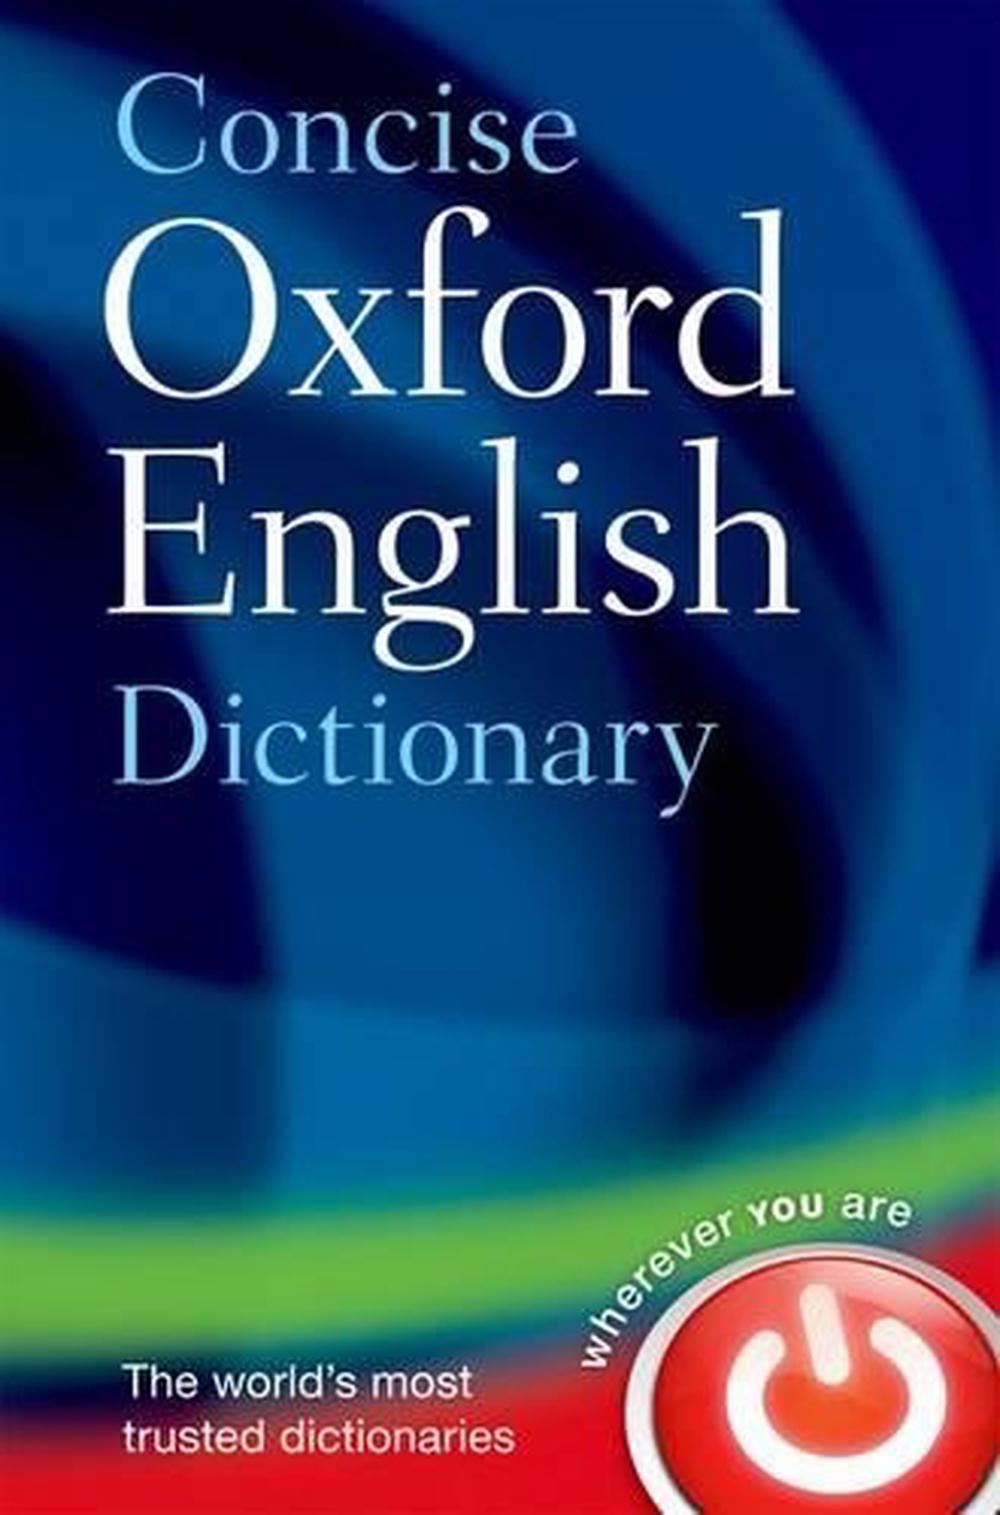 homework oxford dictionary definition